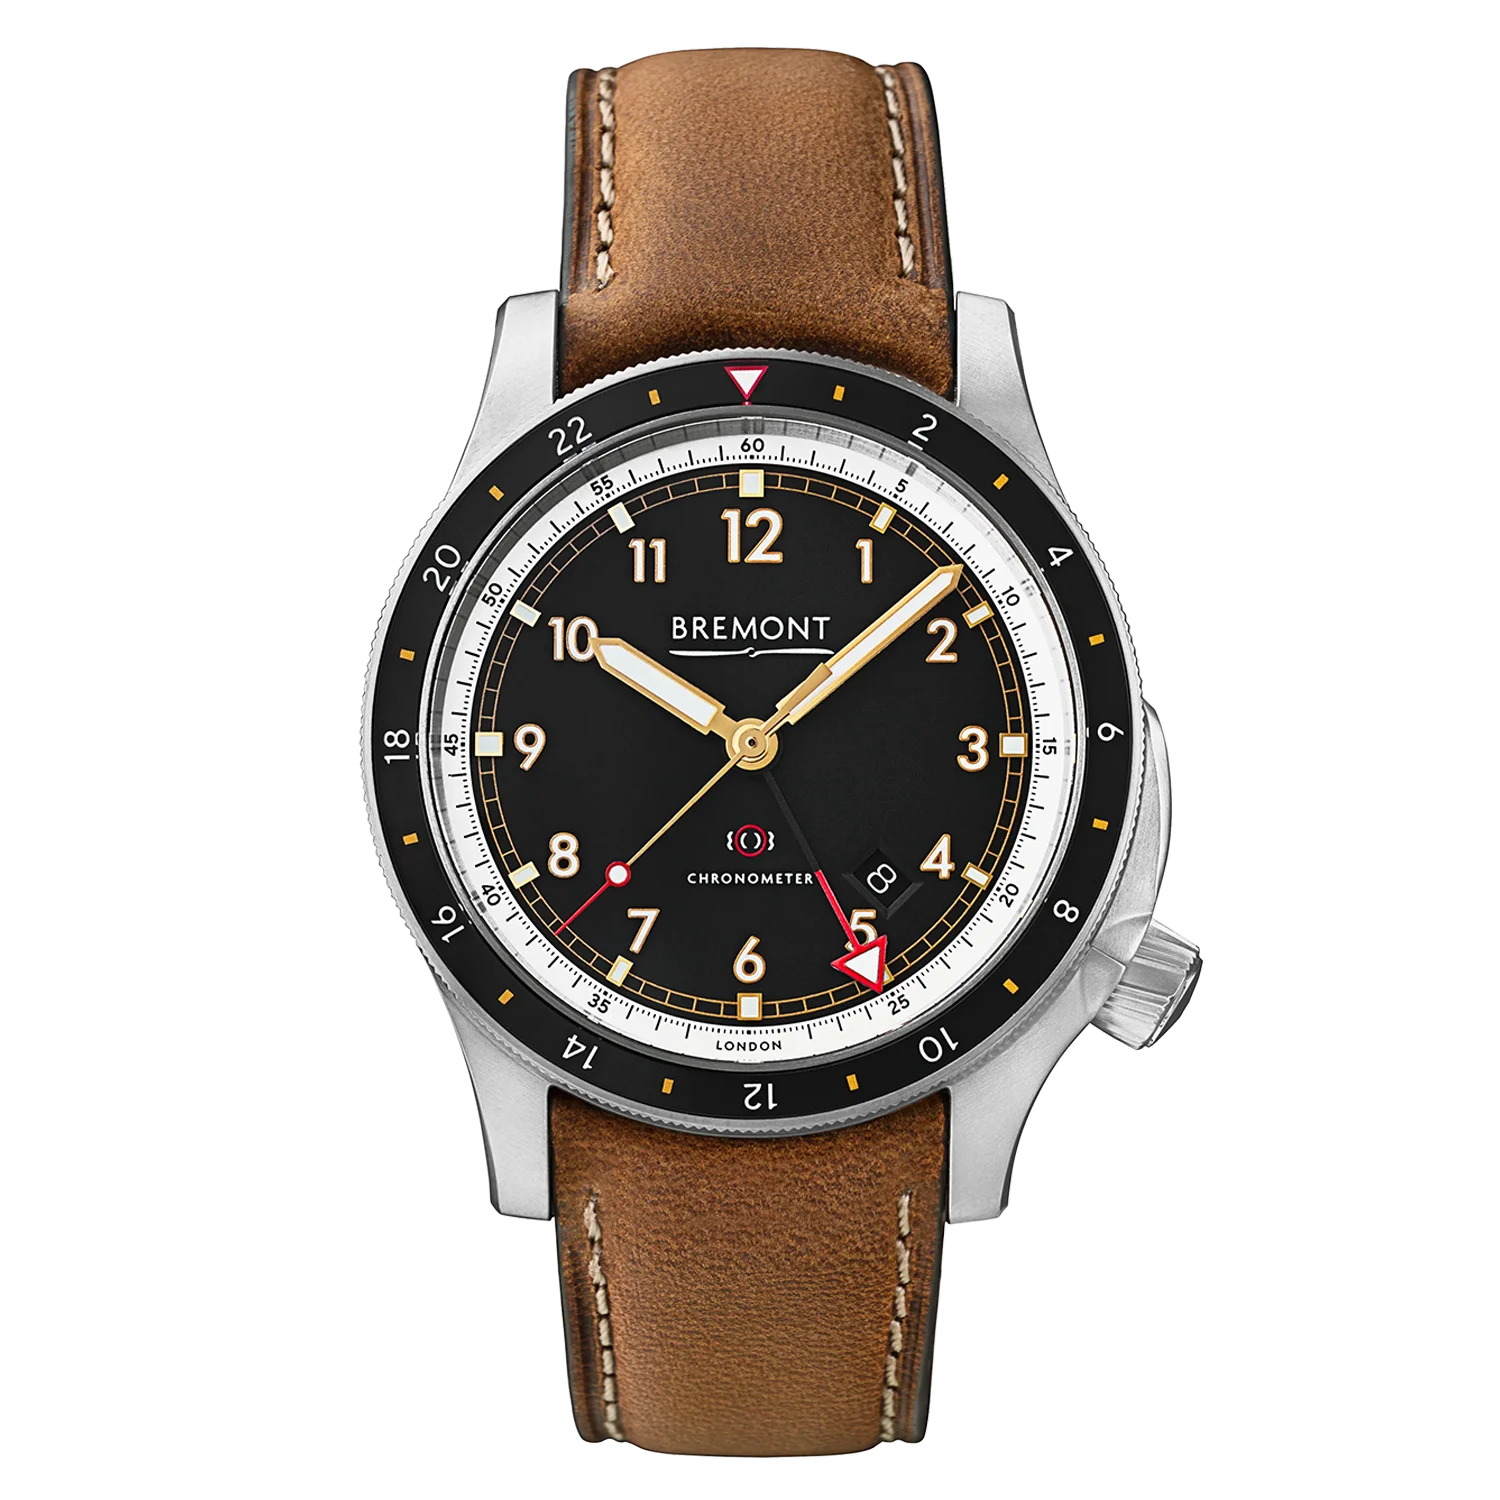 Bremont Chronometers Watches | Mens | IONBIRD ionBird